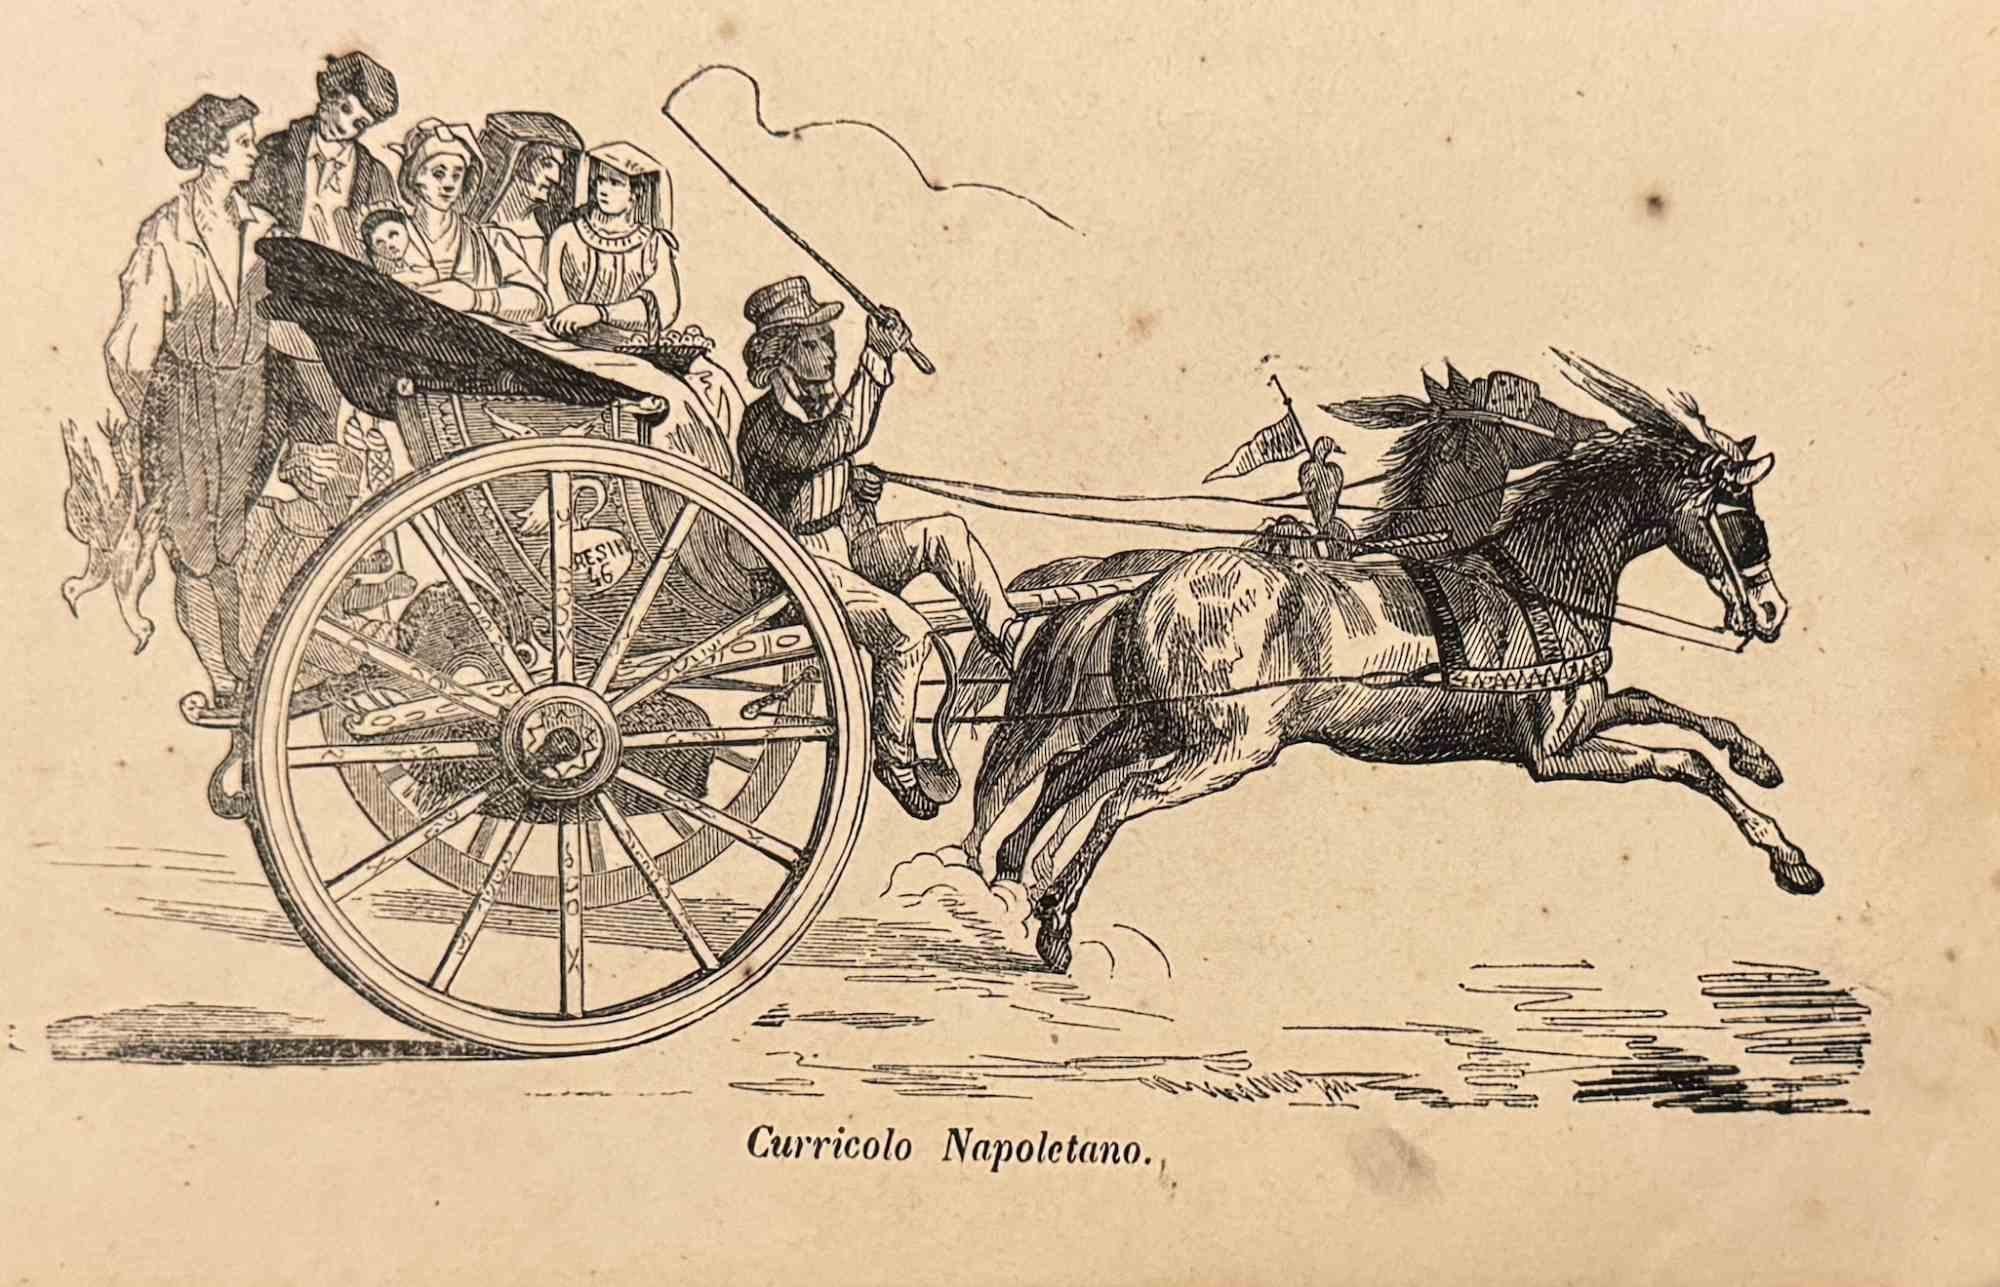 Unknown Figurative Print - Neapolitan Curriculum - Lithograph - 19th Century 